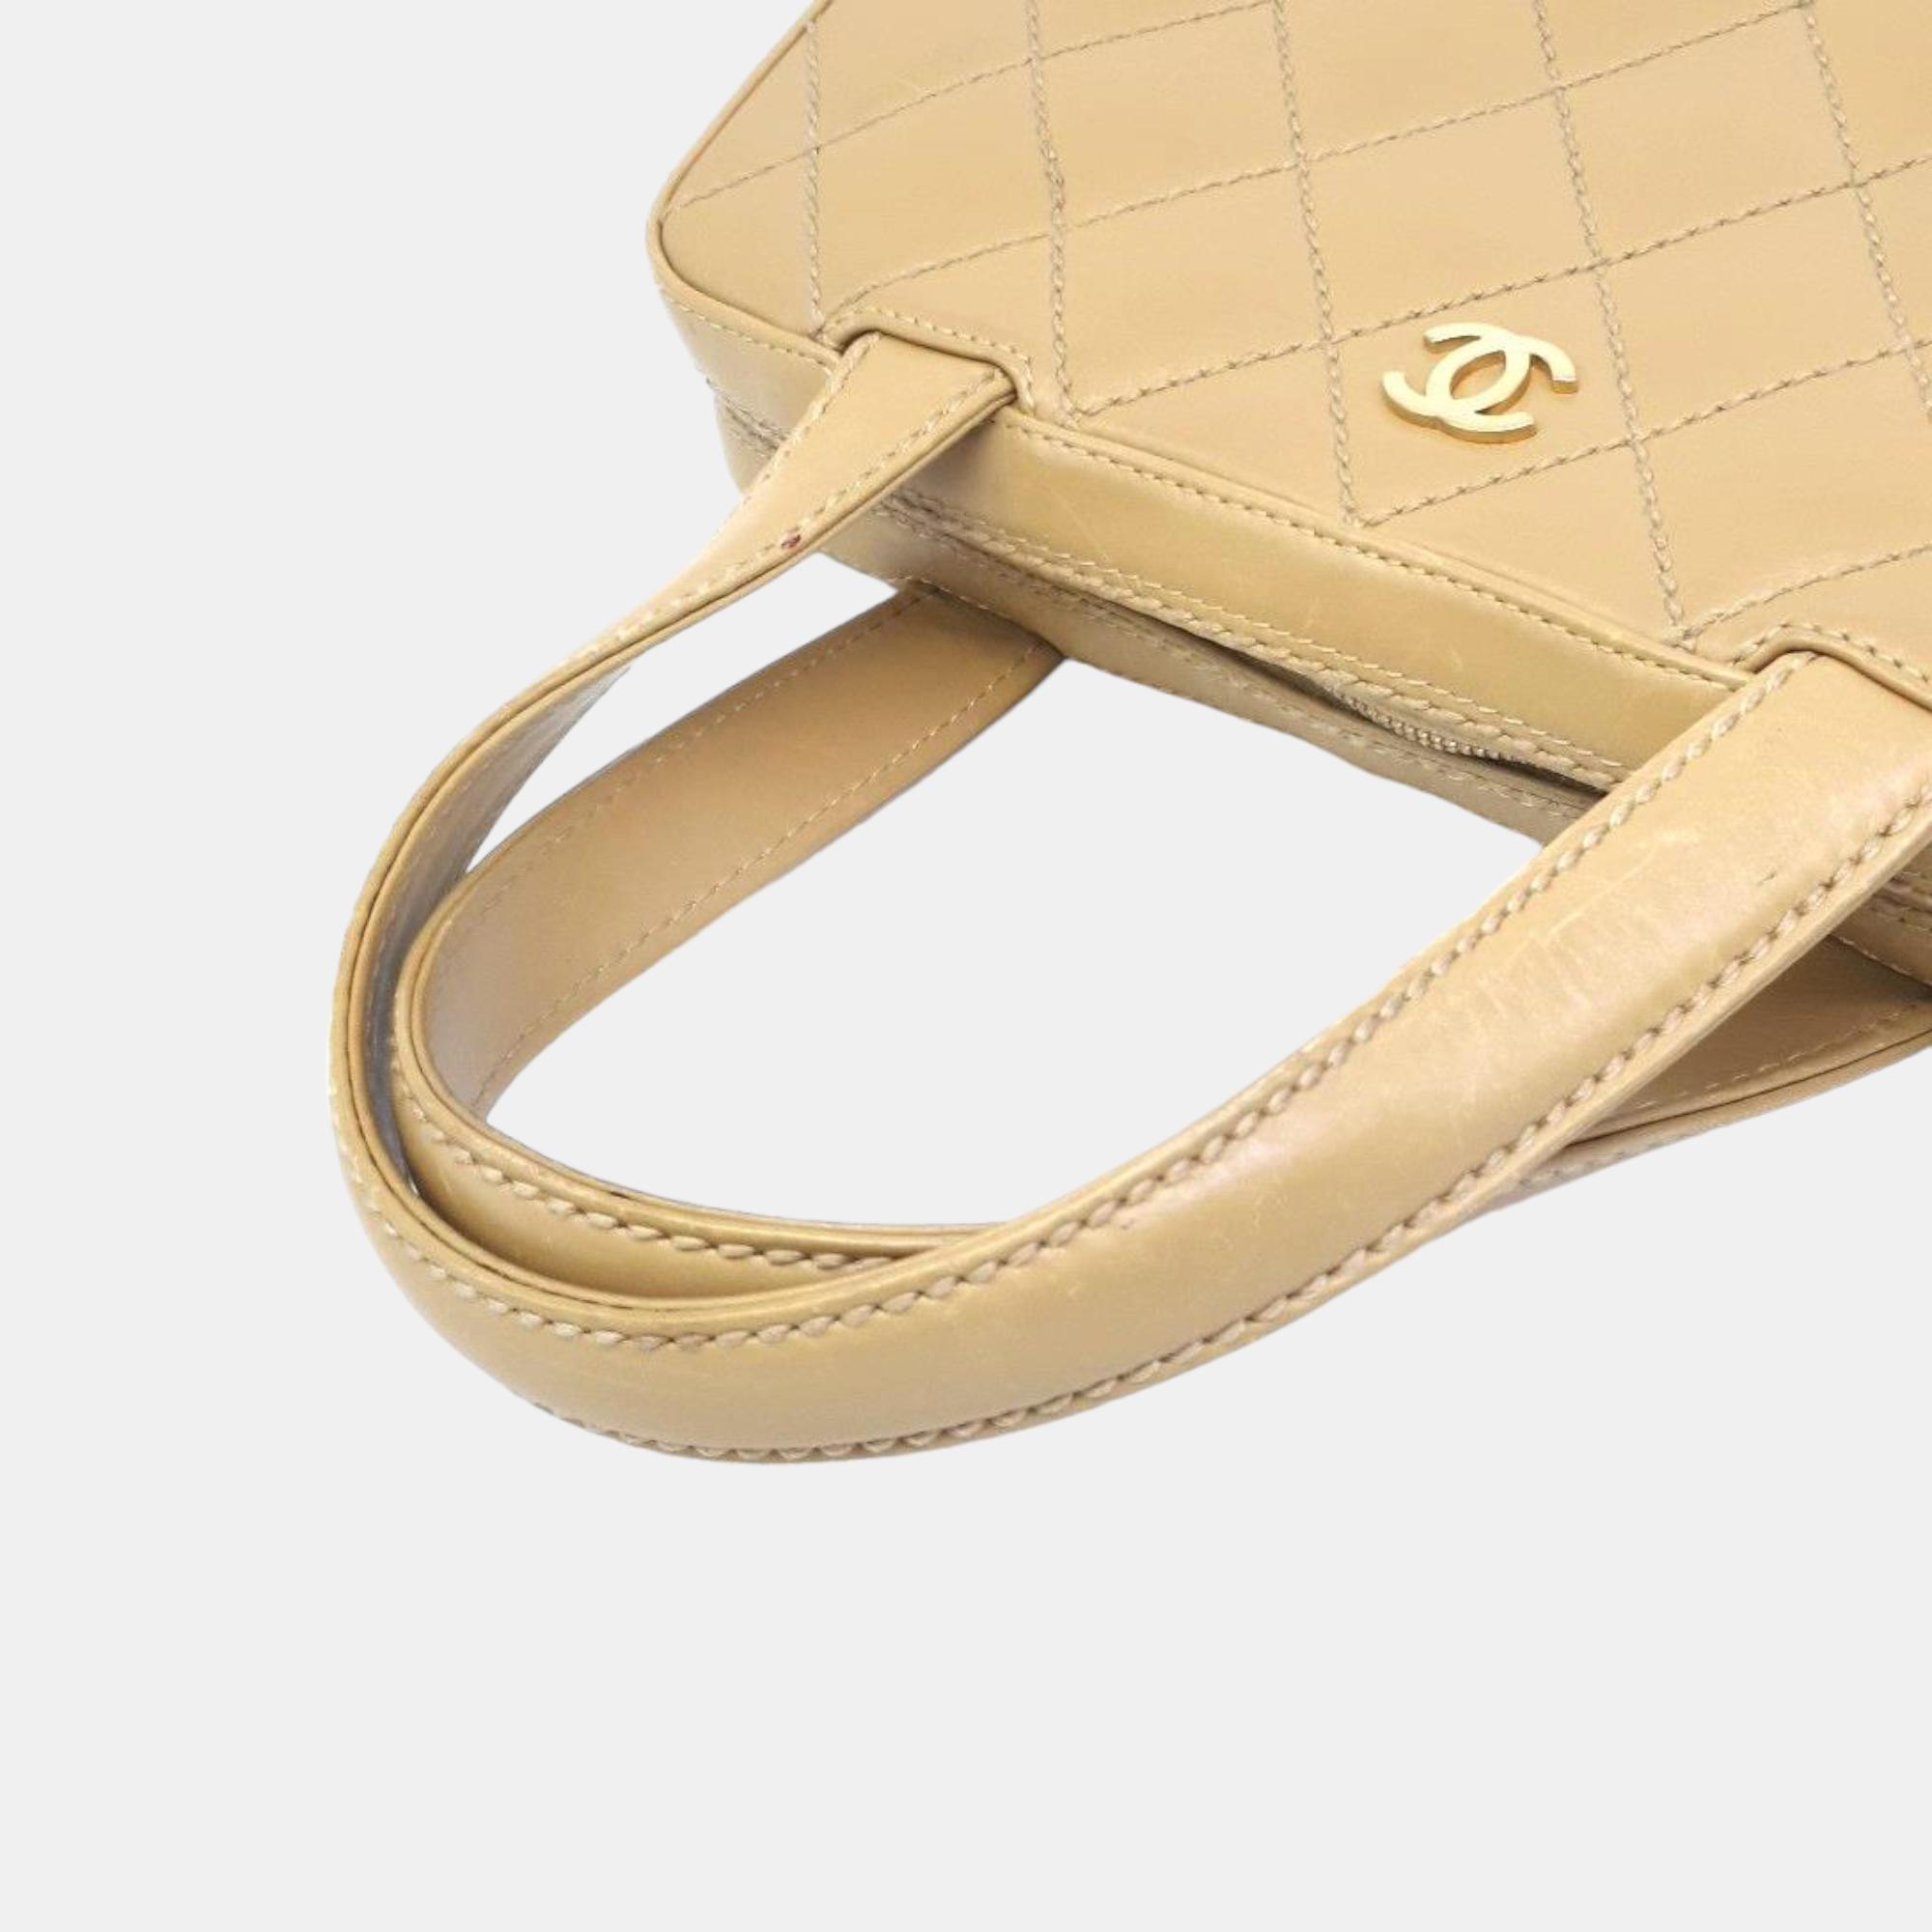 Chanel Beige Leather Wild Stitch Shoulder Bag